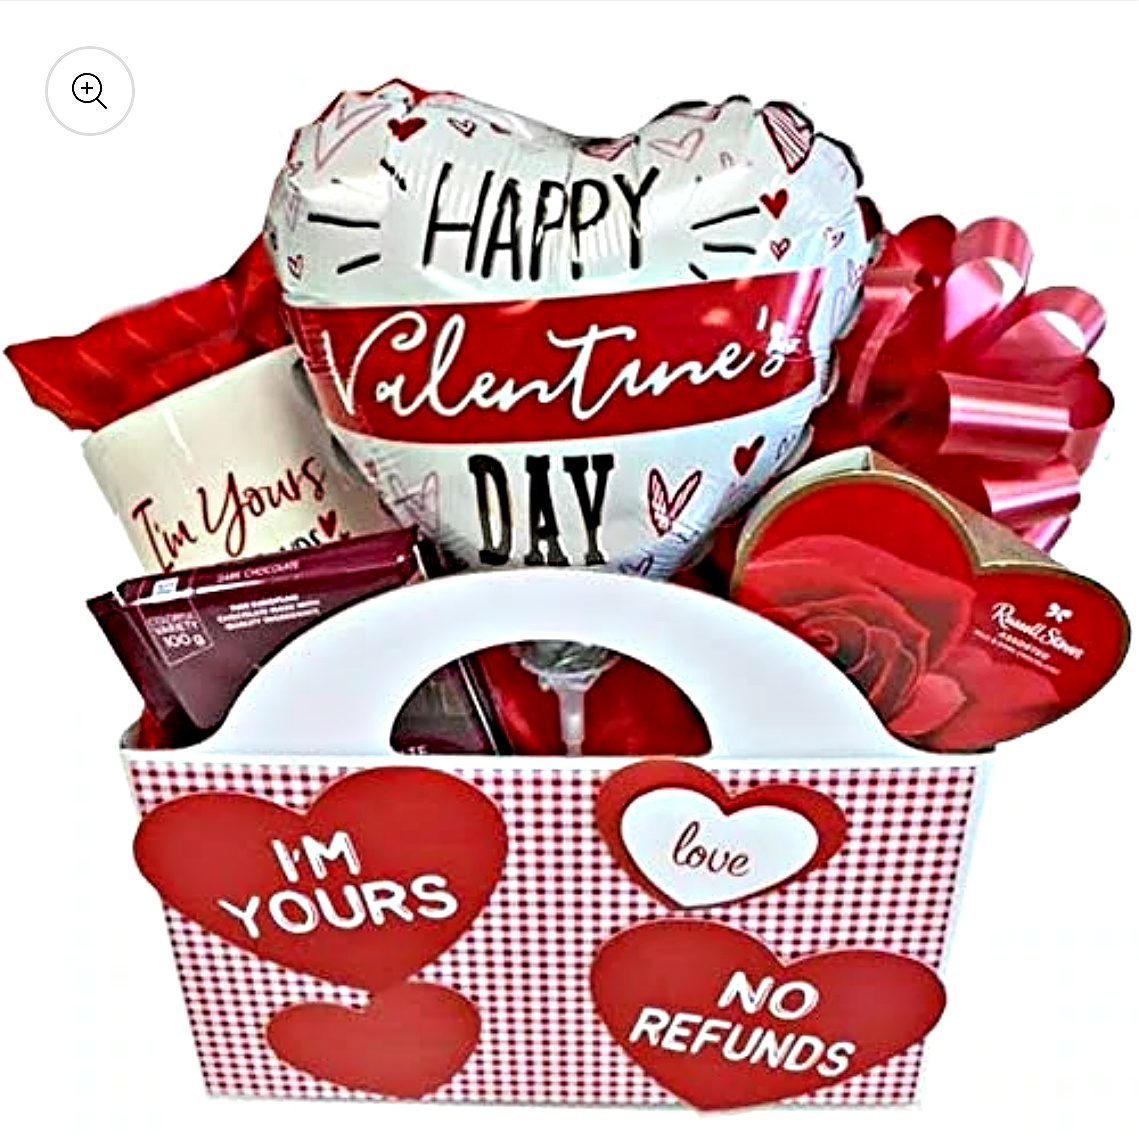 Amazon.com : Birthday Gift Basket, Chocolate Gift Basket, Birthday Gift  Basket for Men, Birthday Gift Basket for Women, Birthday Gifts, Chocolate  Gifts : Grocery & Gourmet Food